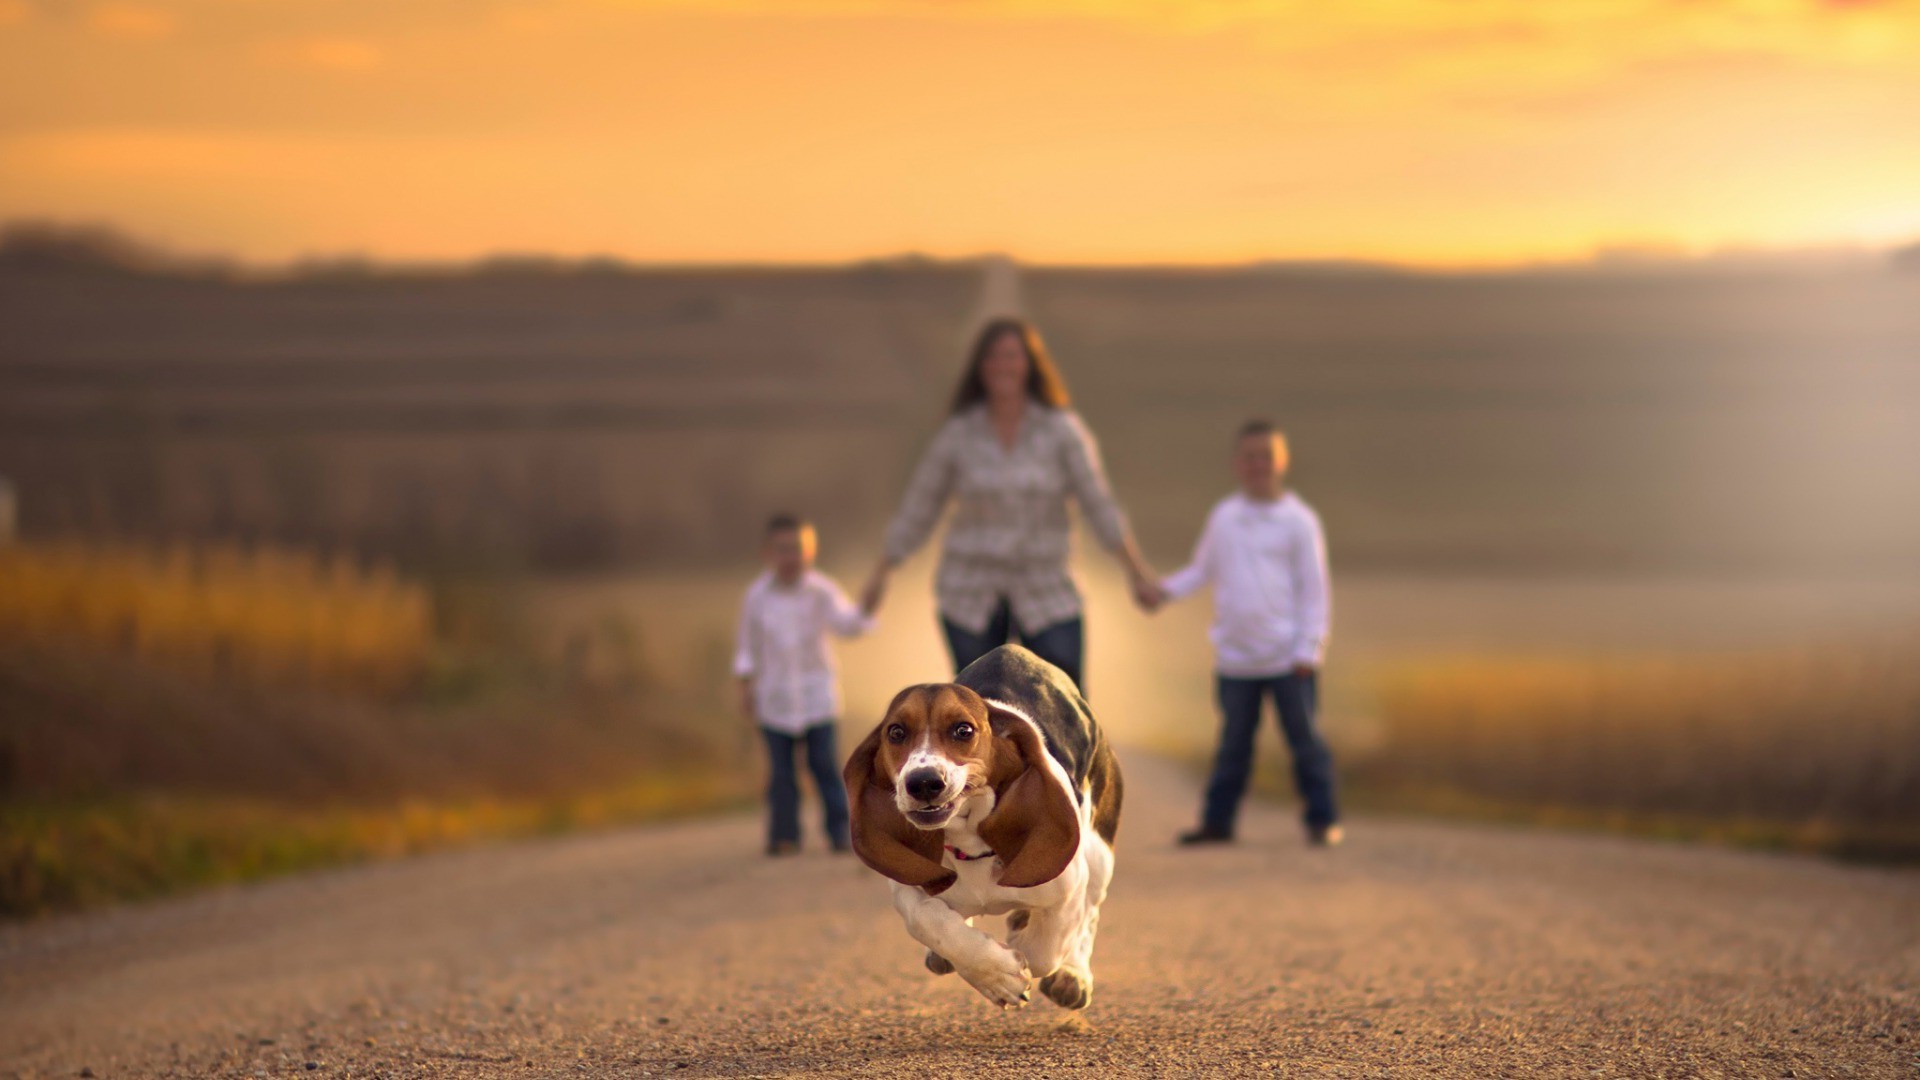 1920x1080 families, Road, Holding Hands, Depth Of Field, Dog, Animals, Running,  Beagles, Jake Olson, Nebraska Wallpapers HD / Desktop and Mobile Backgrounds